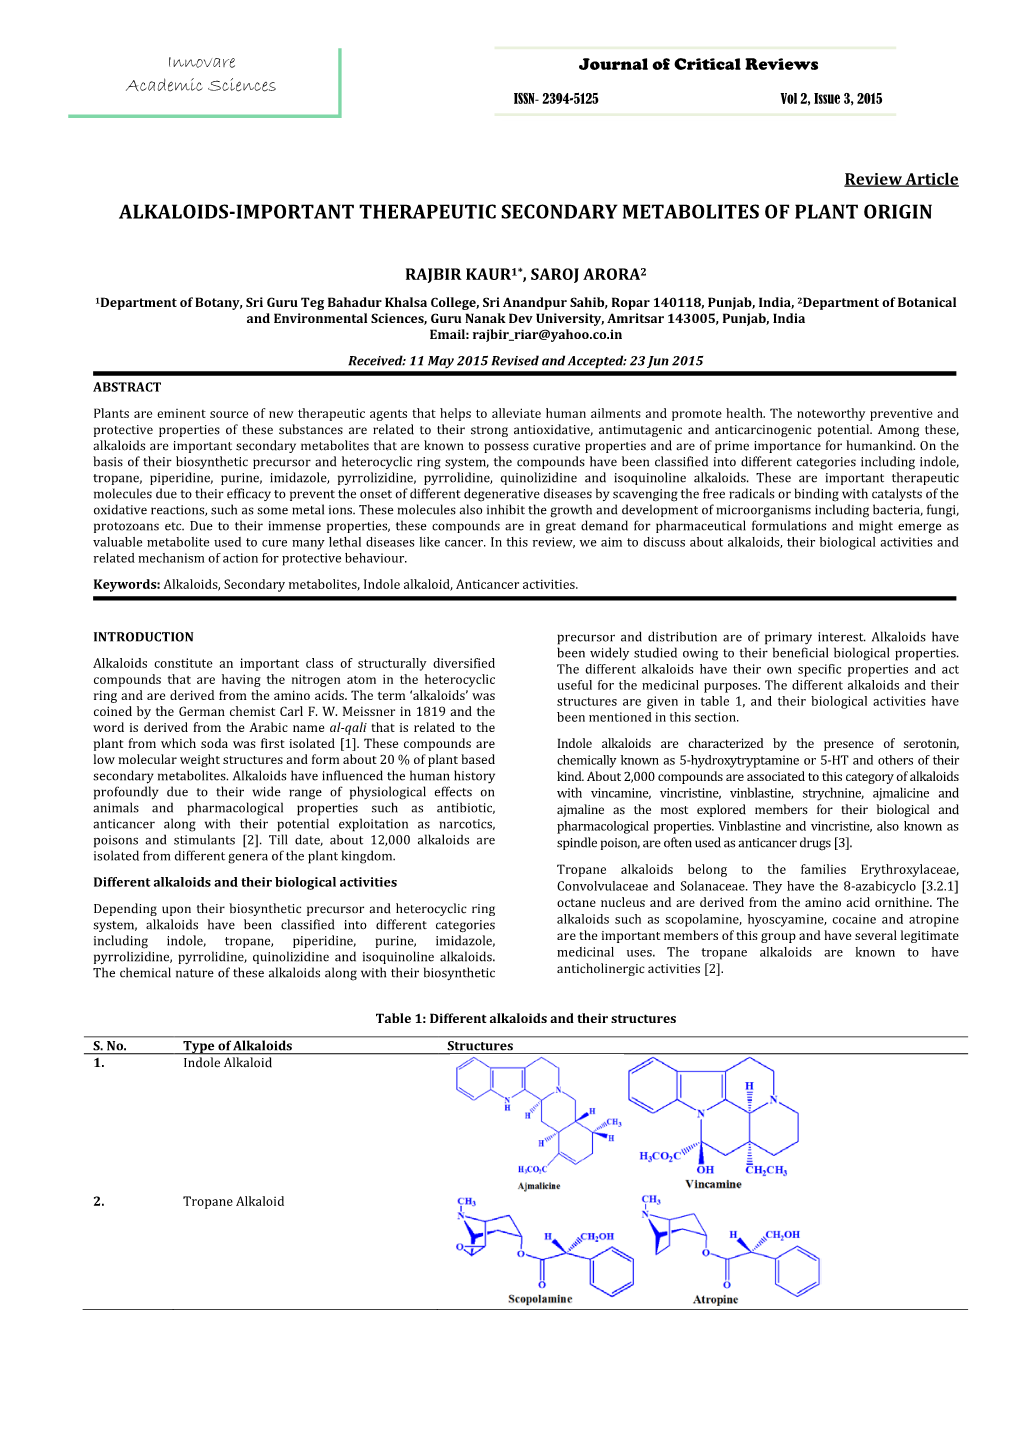 Alkaloids-Important Therapeutic Secondary Metabolites of Plant Origin